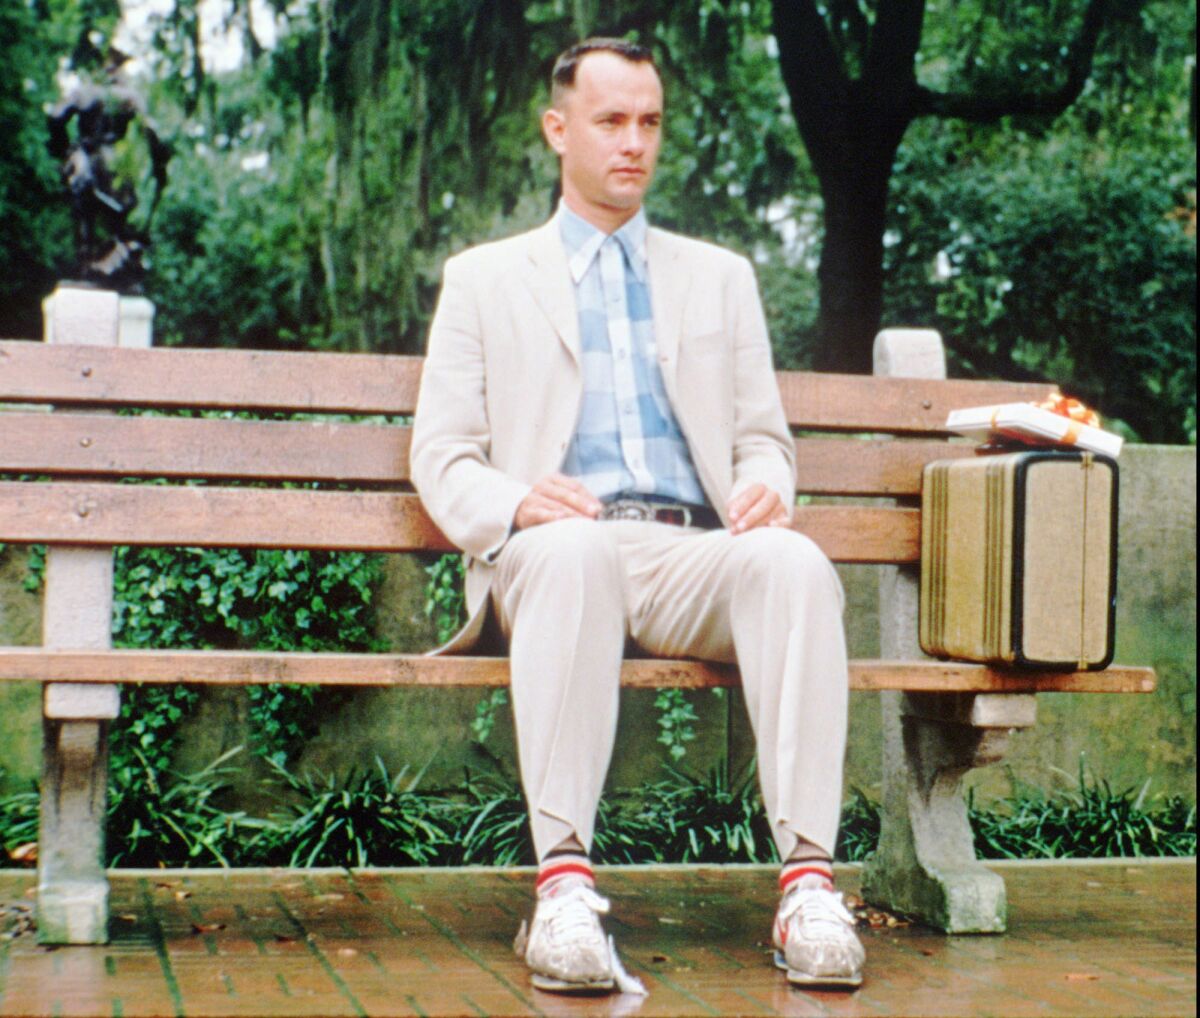  Tom Hanks sitting on a bench in "Forrest Gump"